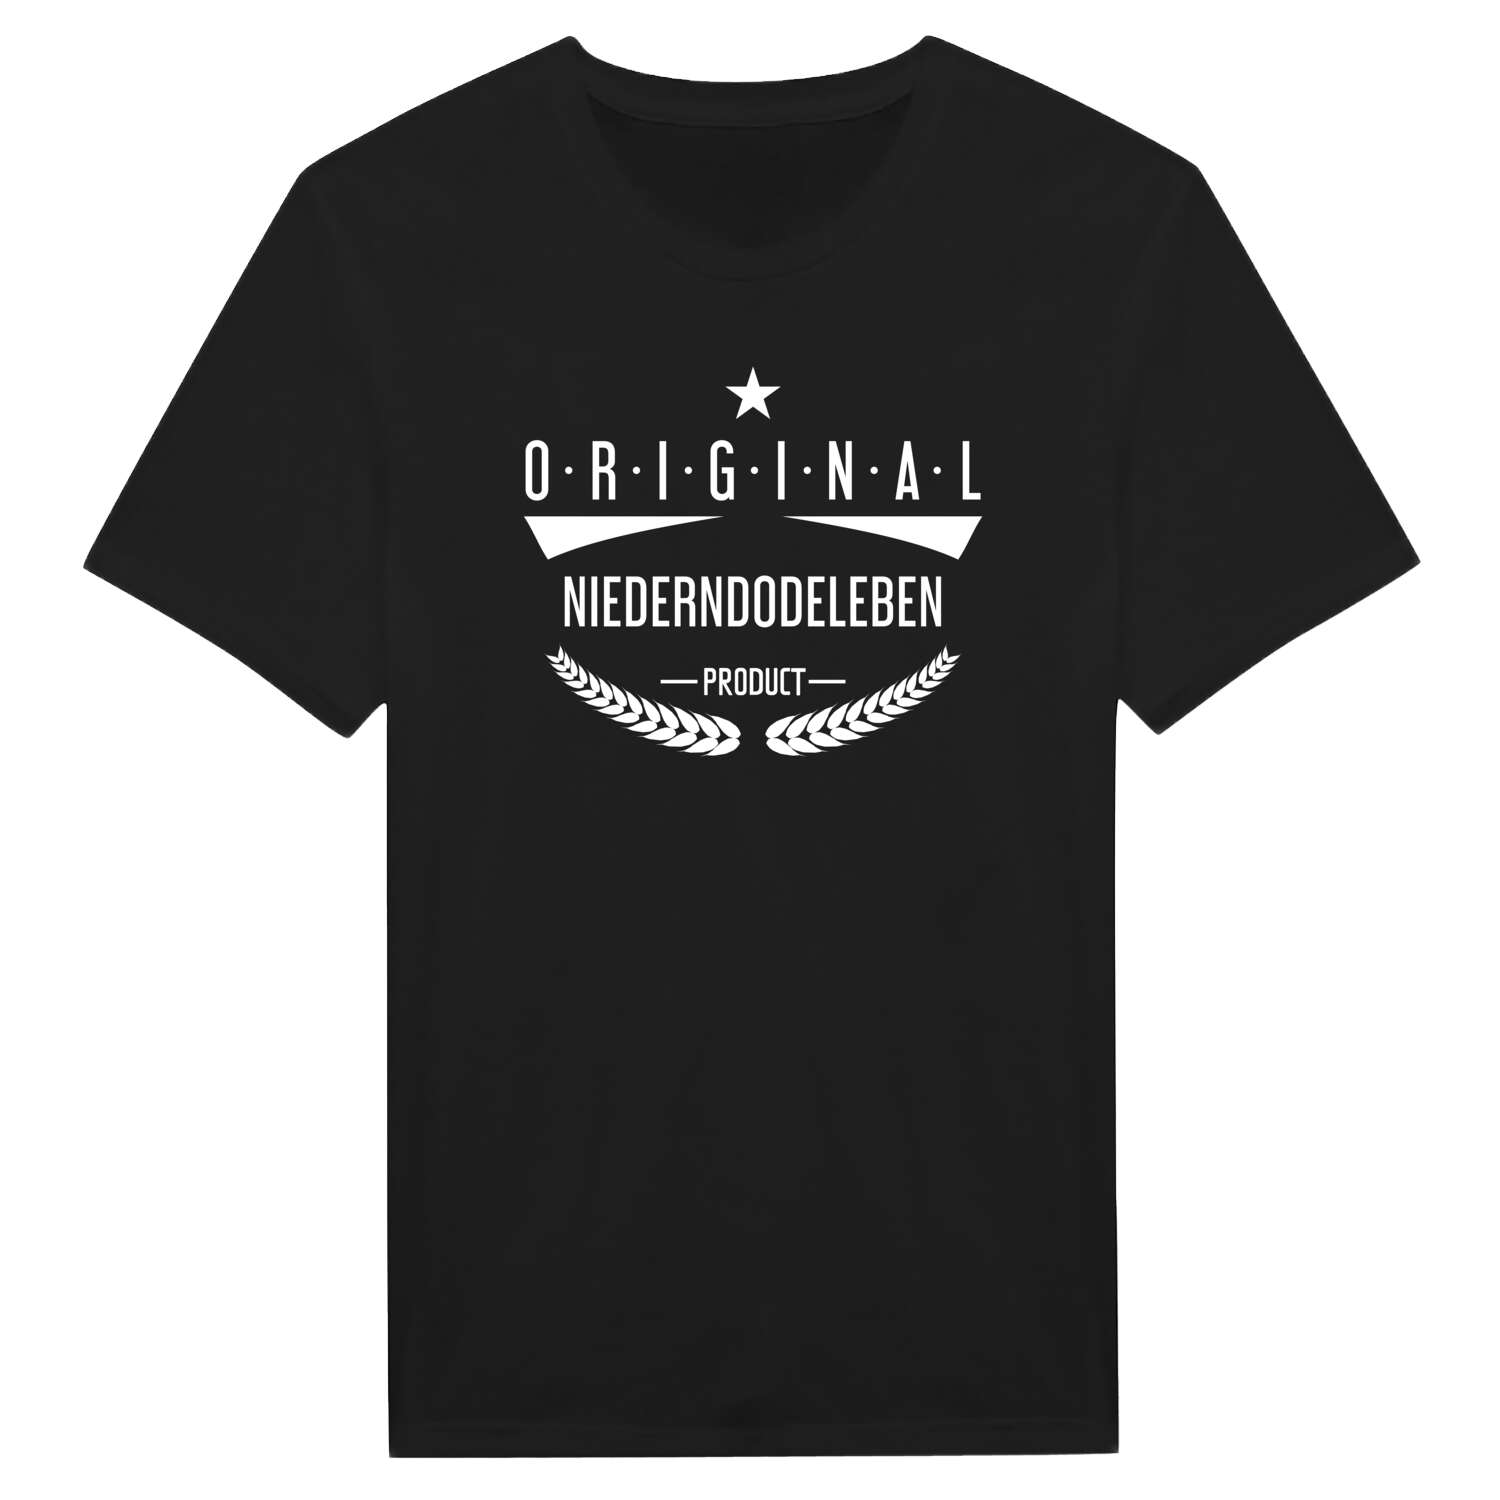 Niederndodeleben T-Shirt »Original Product«